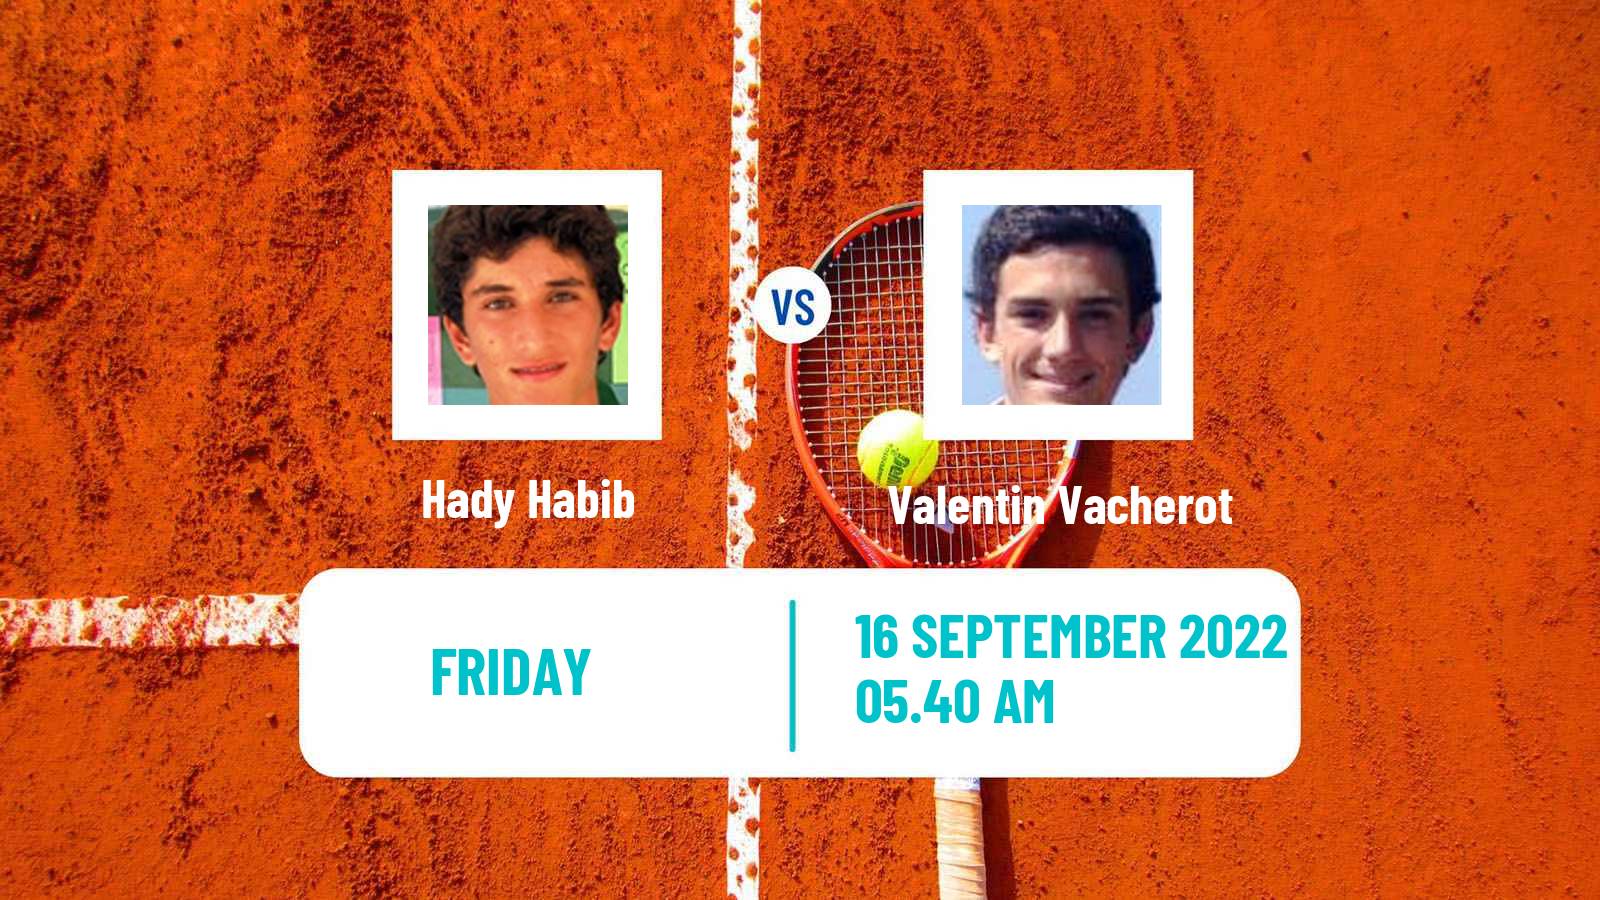 Tennis Davis Cup World Group II Hady Habib - Valentin Vacherot